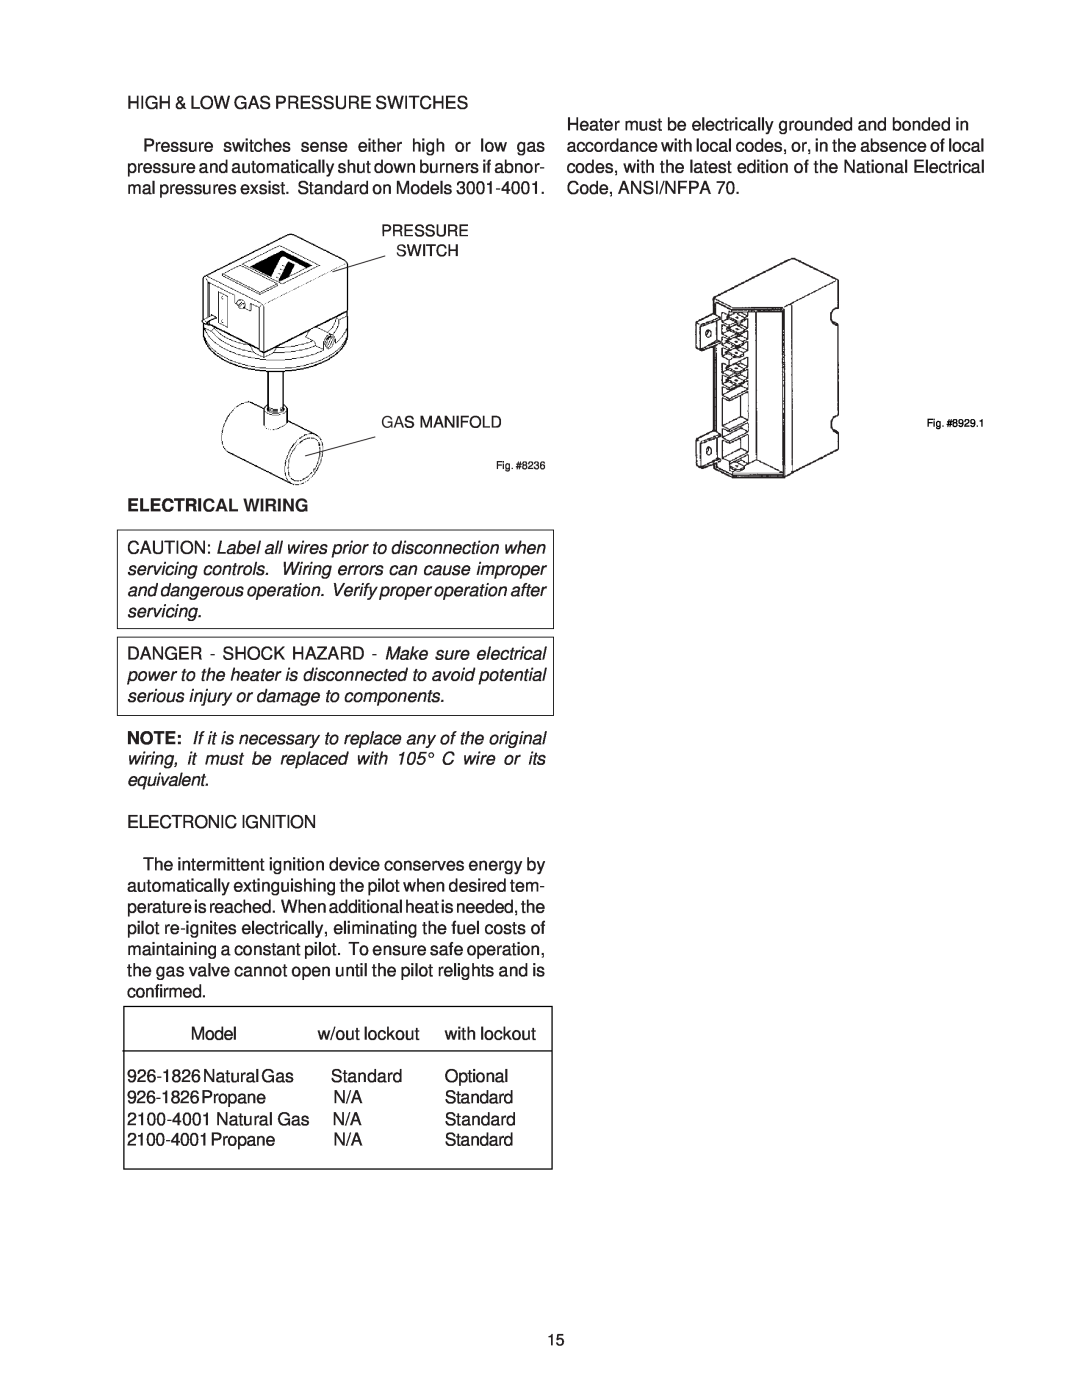 Raypak 1287-1758, 2100-4001, P-926, P-1826, P-2100, P-4001 manual Electrical Wiring, Pressure Switch, Gas Manifold 